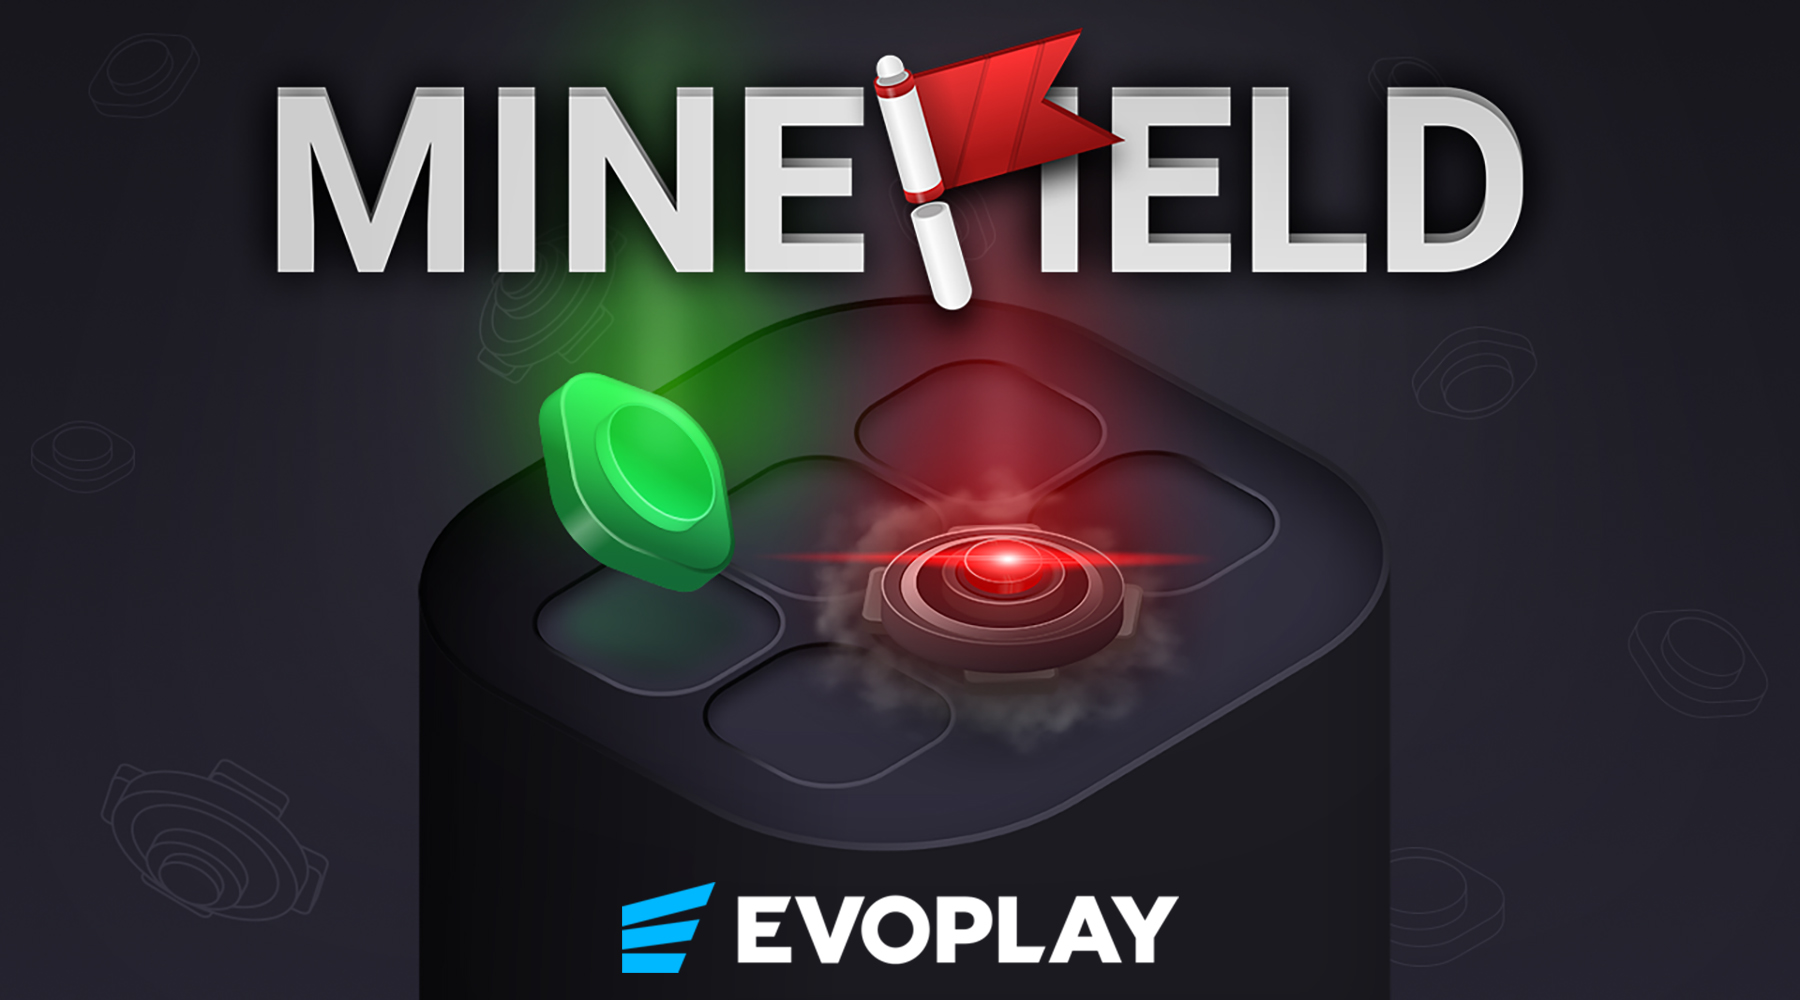 Mine Field by Evoplay